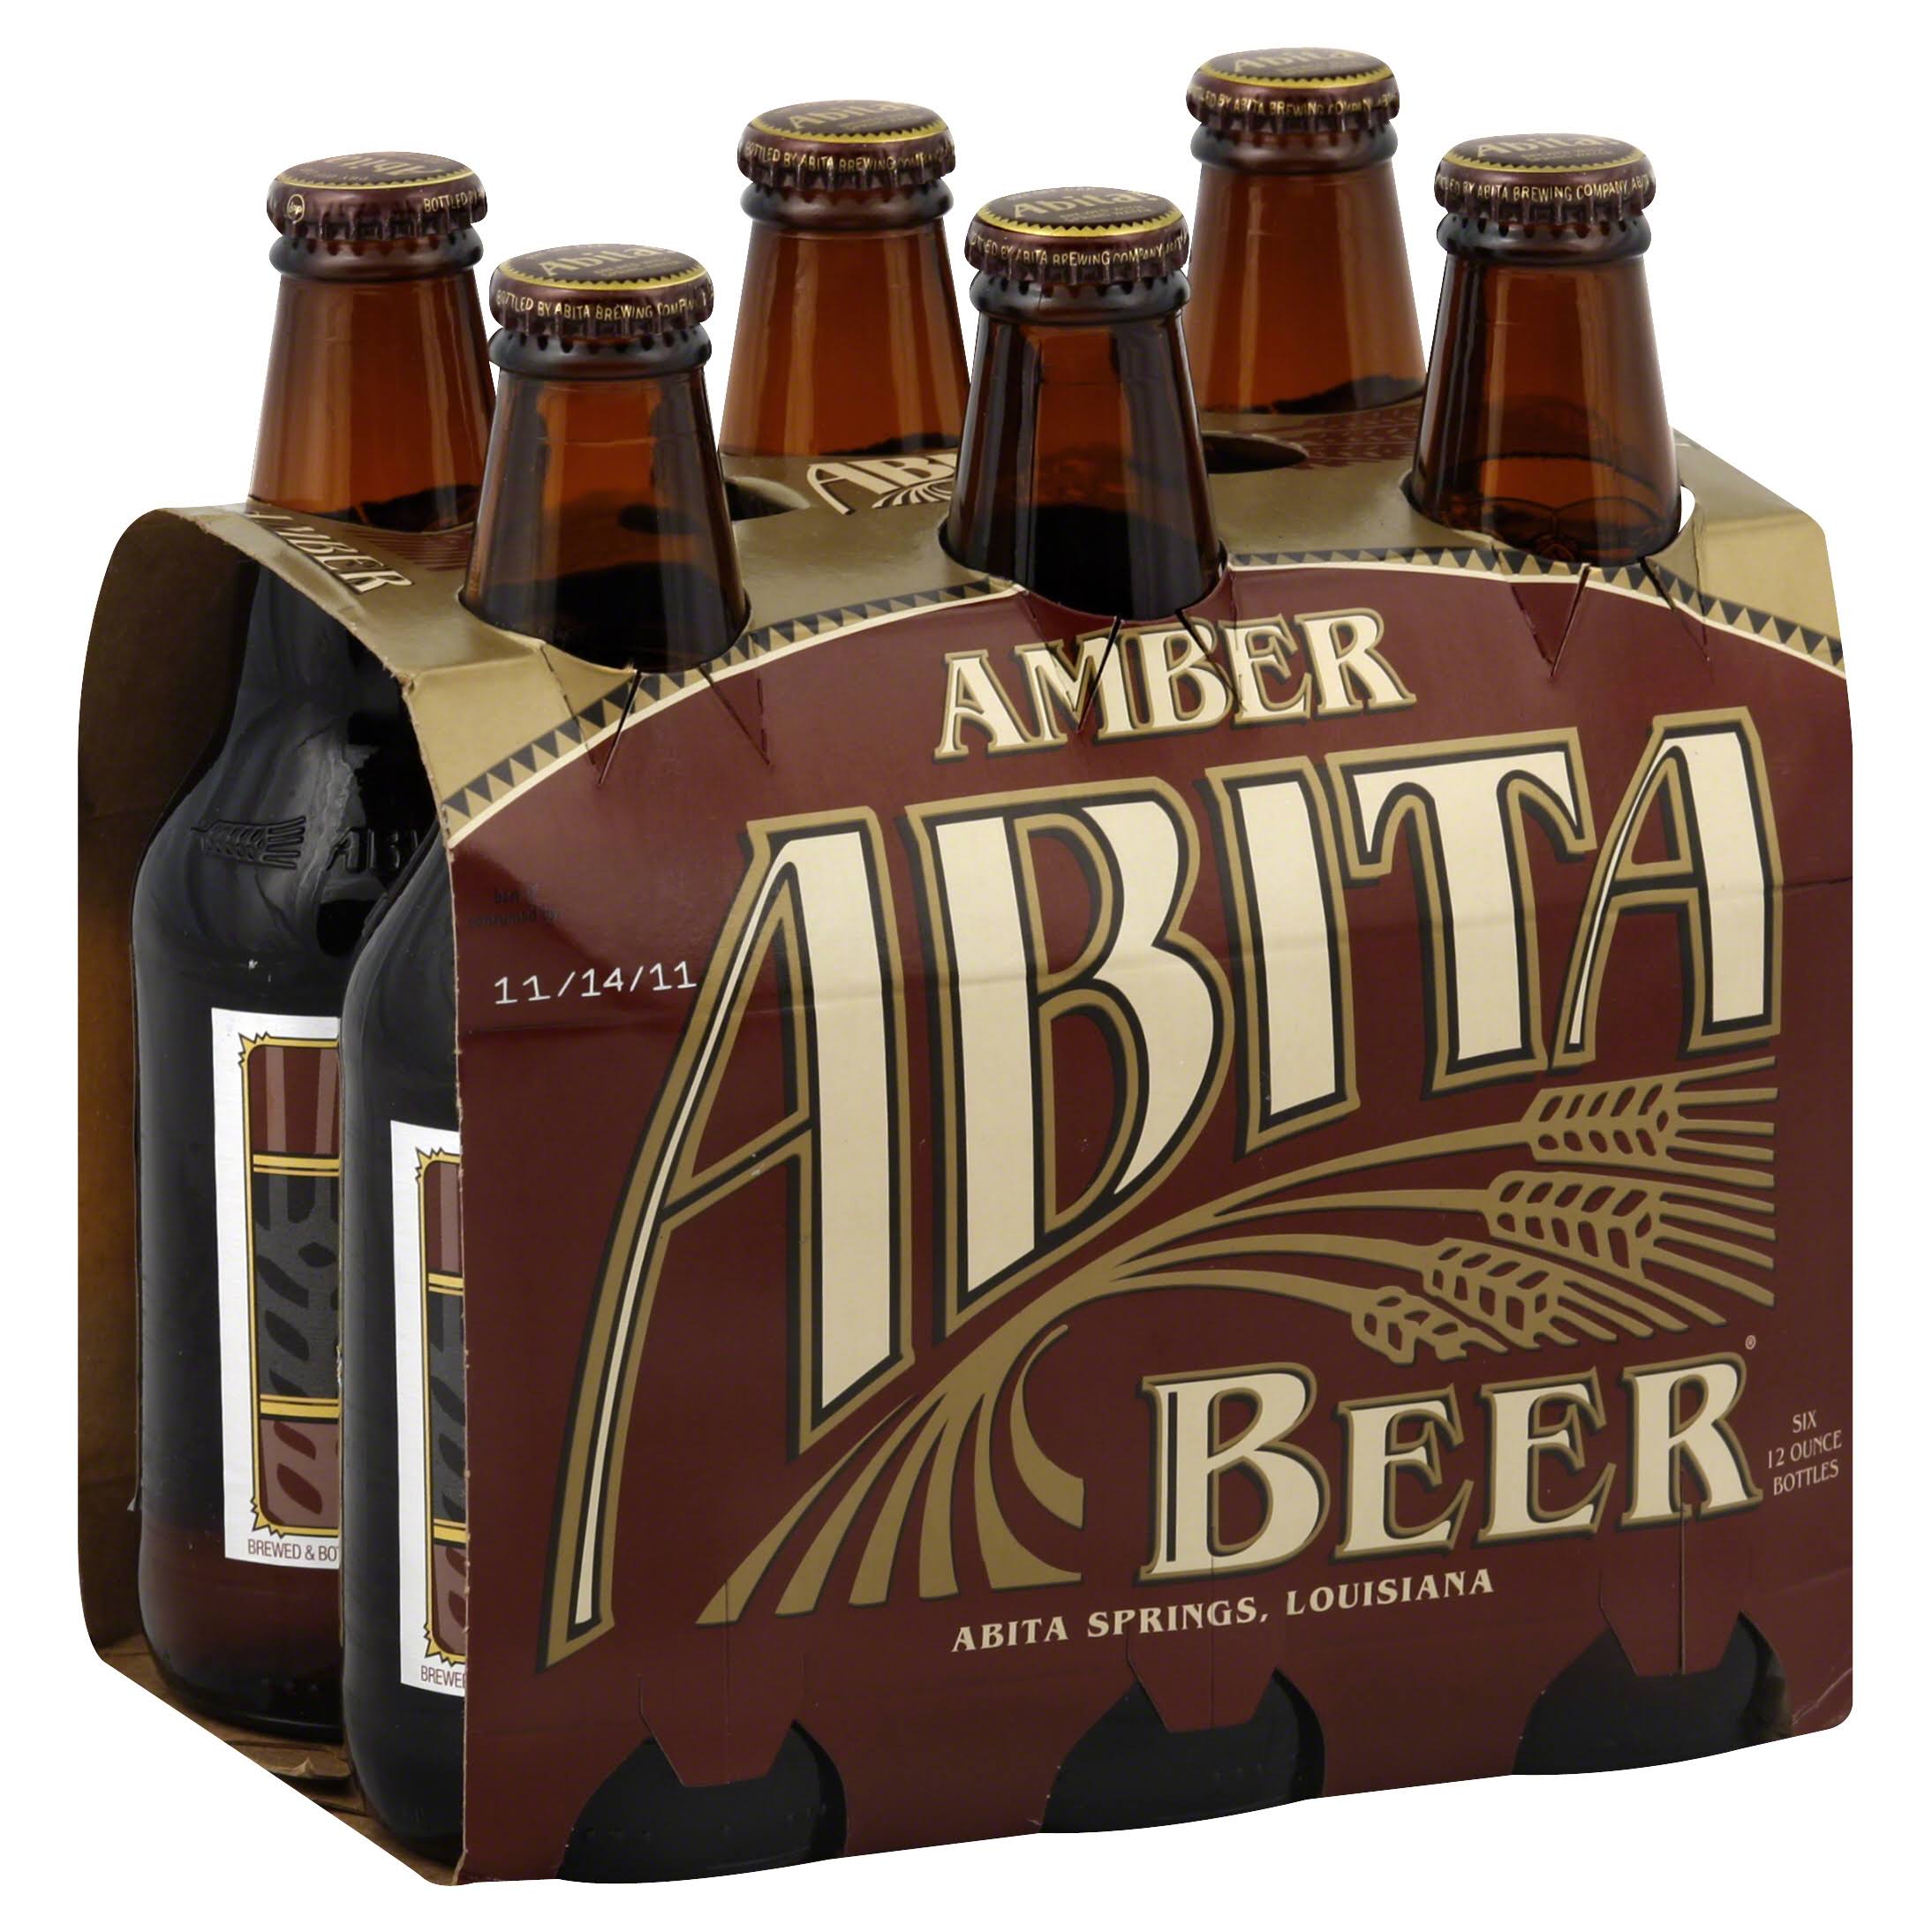 Abita Amber Beer